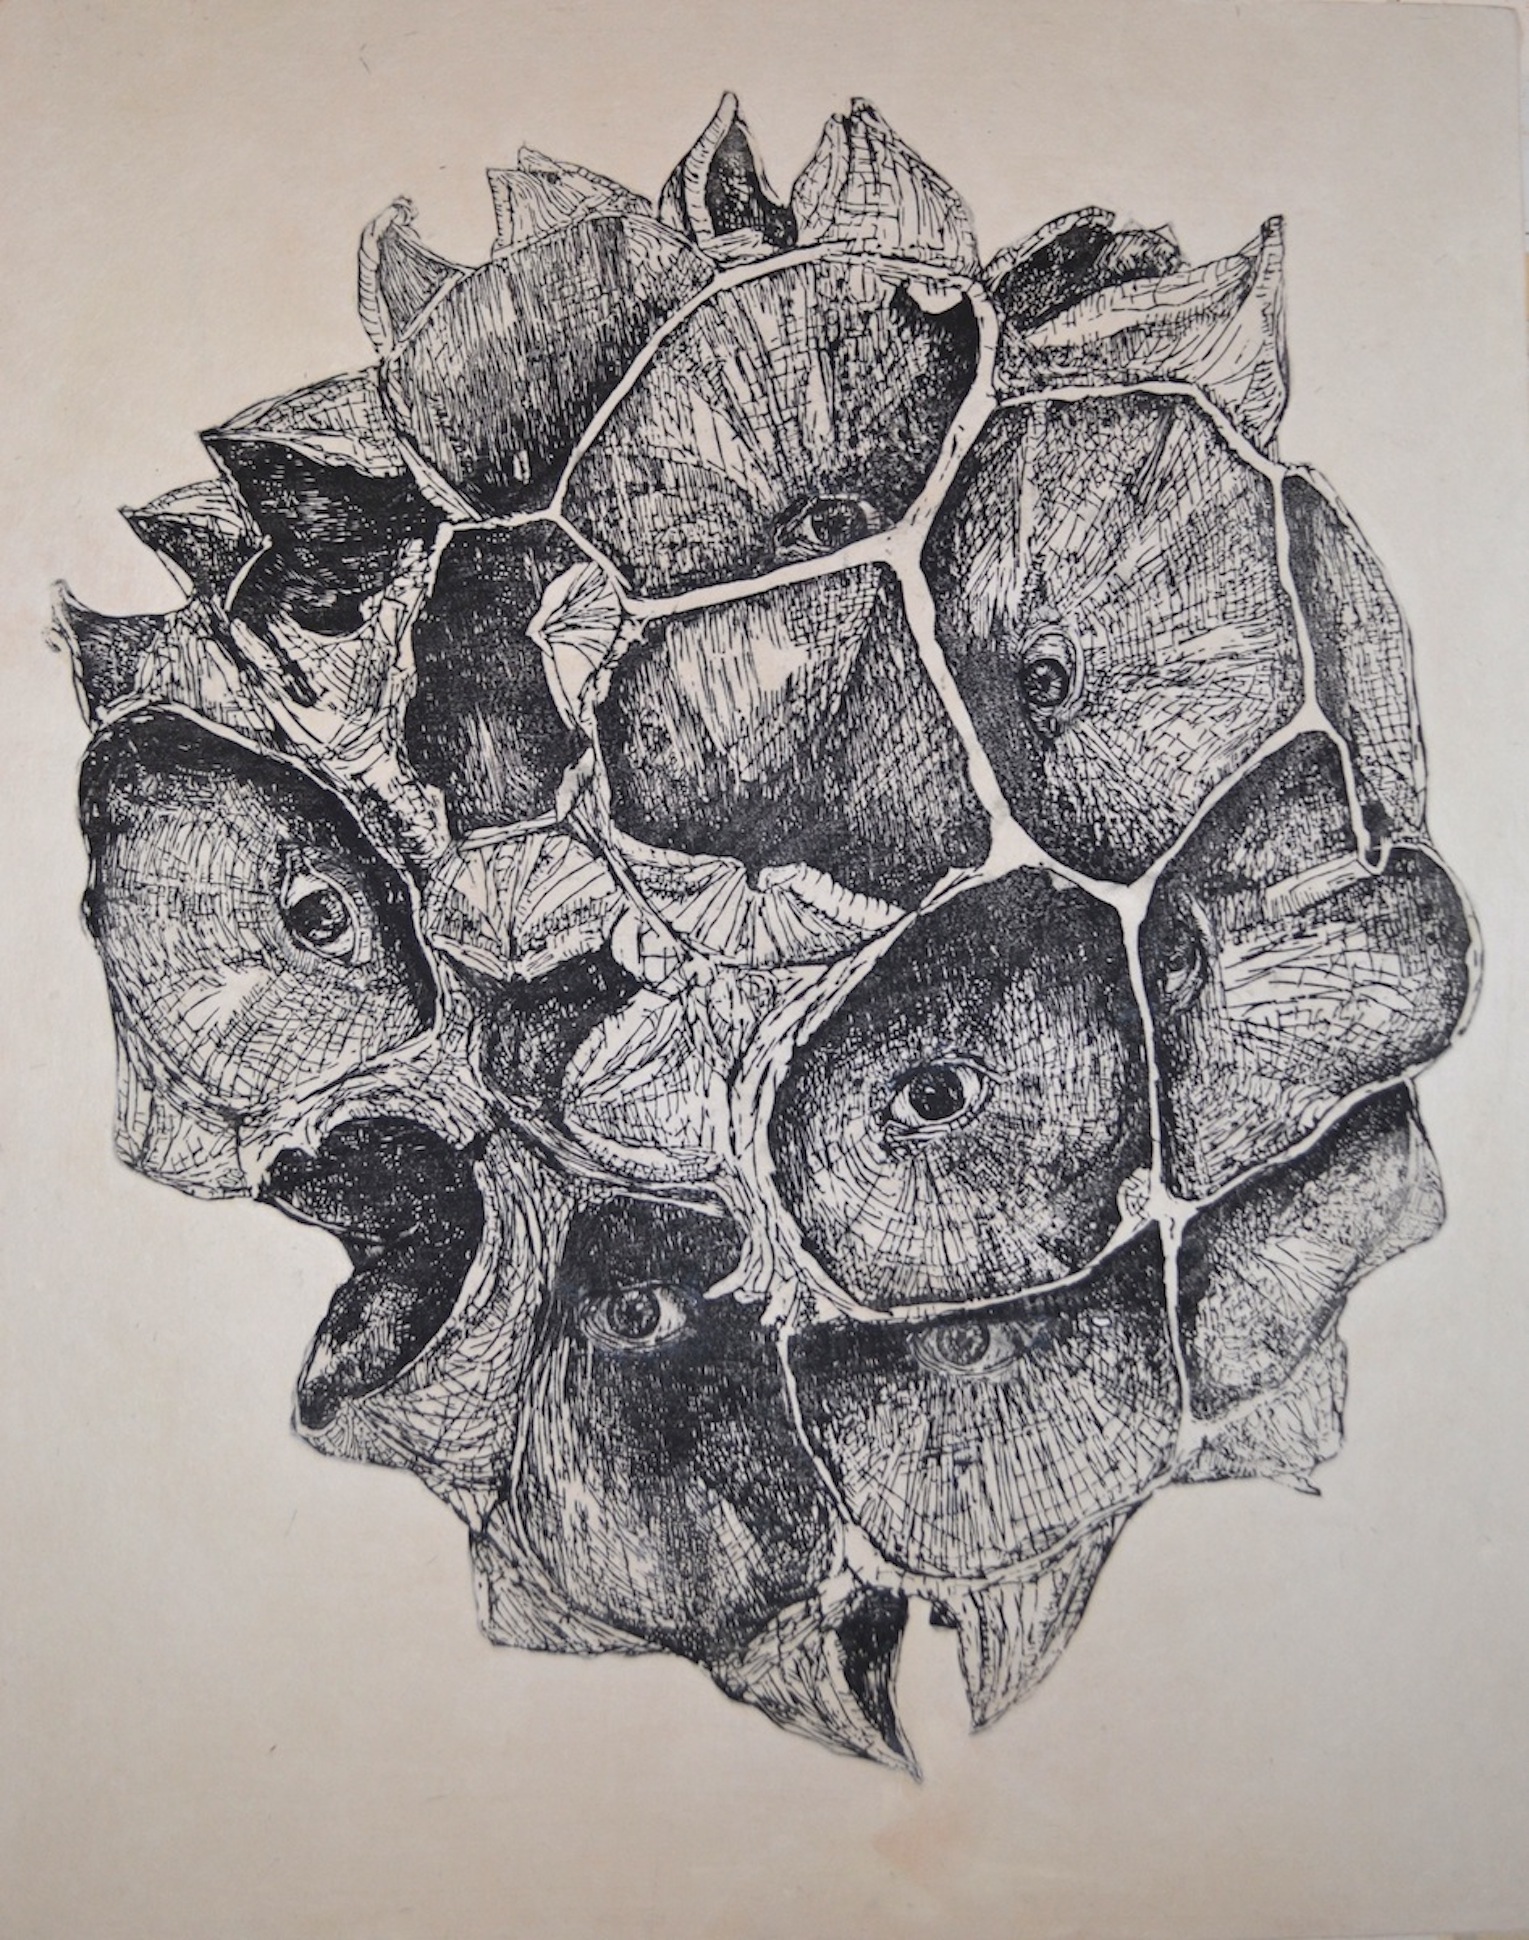  Self-Portrait as a Seed Pod  woodblock prints on kozo paper on wood panel  22" x 18"  2015    